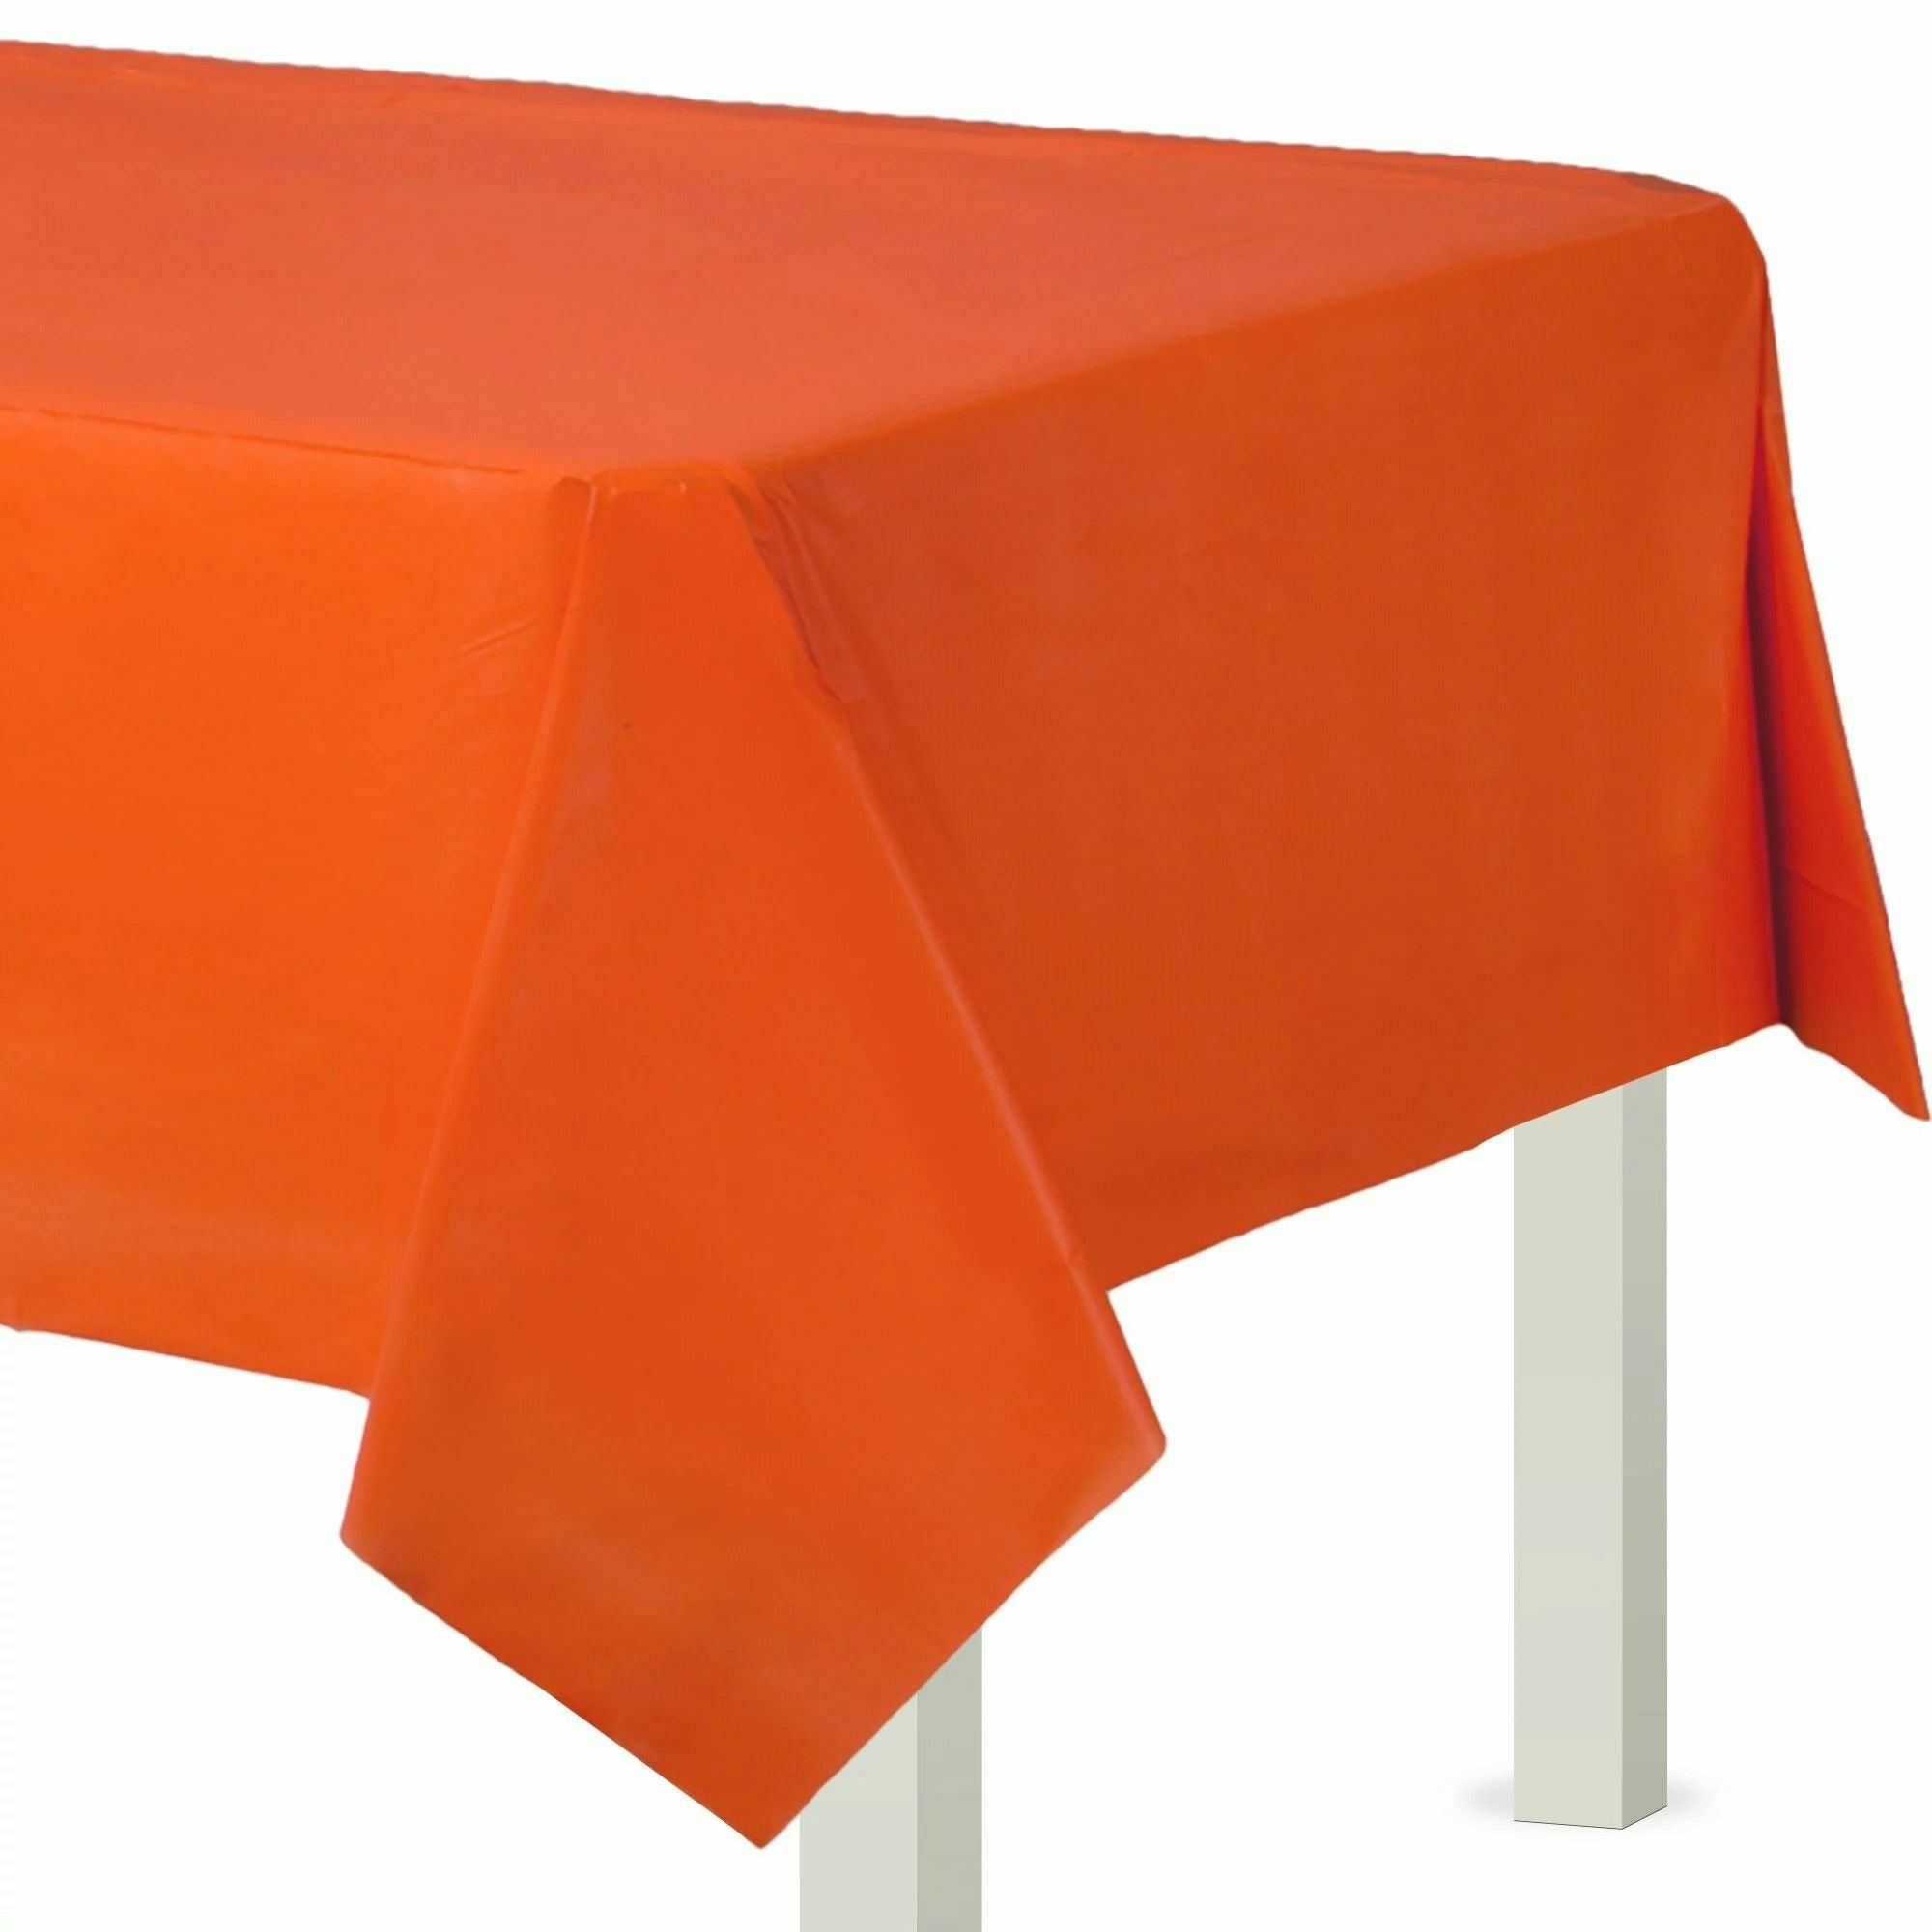 Amscan BASIC Orange Peel - Flannel Backed Table Cover